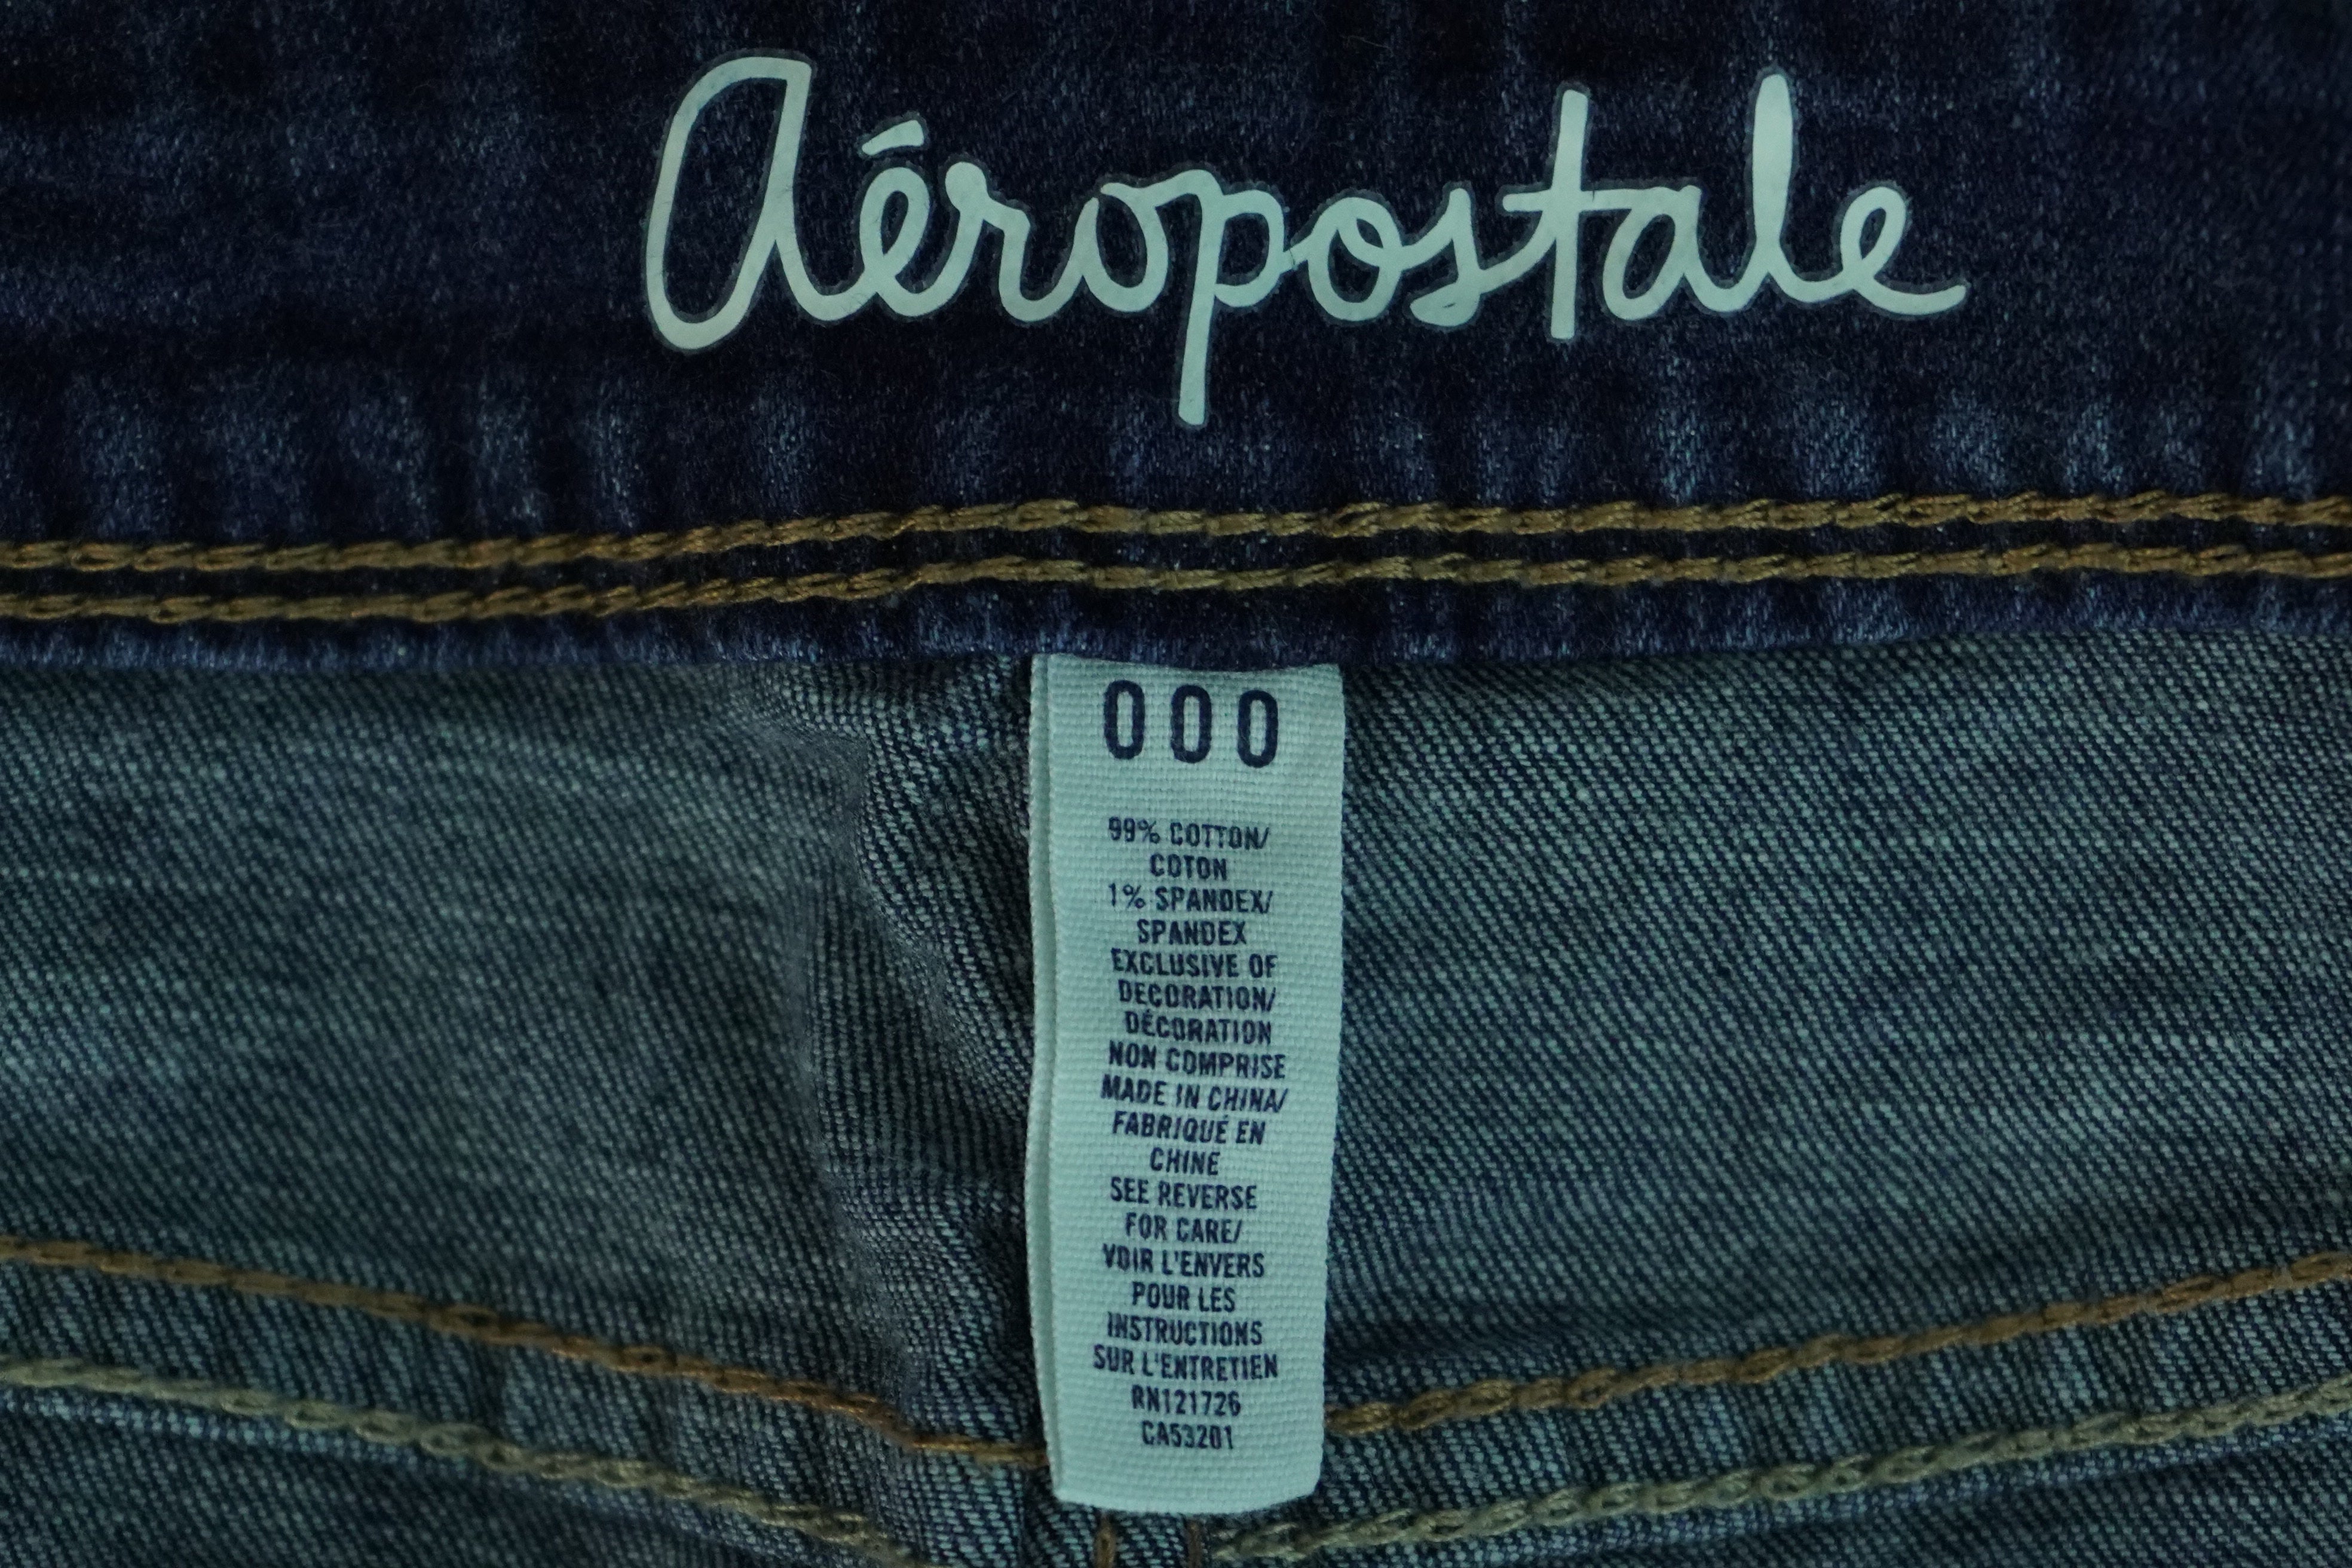 aeropostale 000 jeans